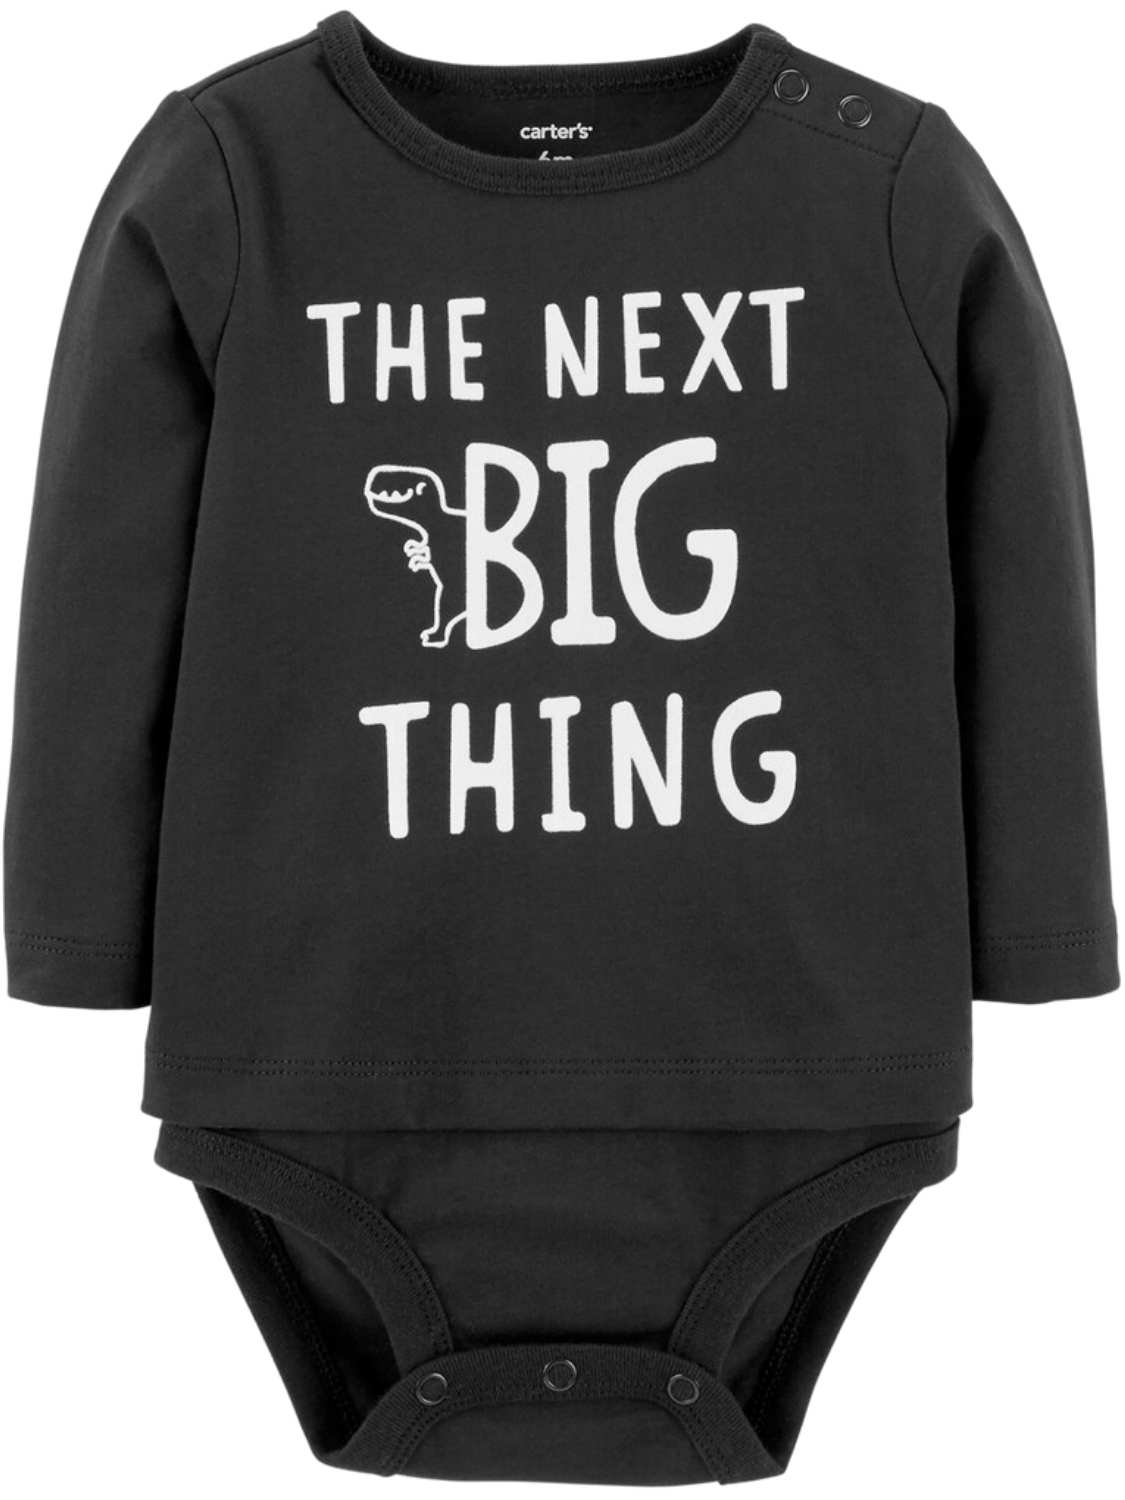 Carter's Carters Infant Baby Boys Black Dinosaur Bodysuit Romper Next Big Thing 3 Months